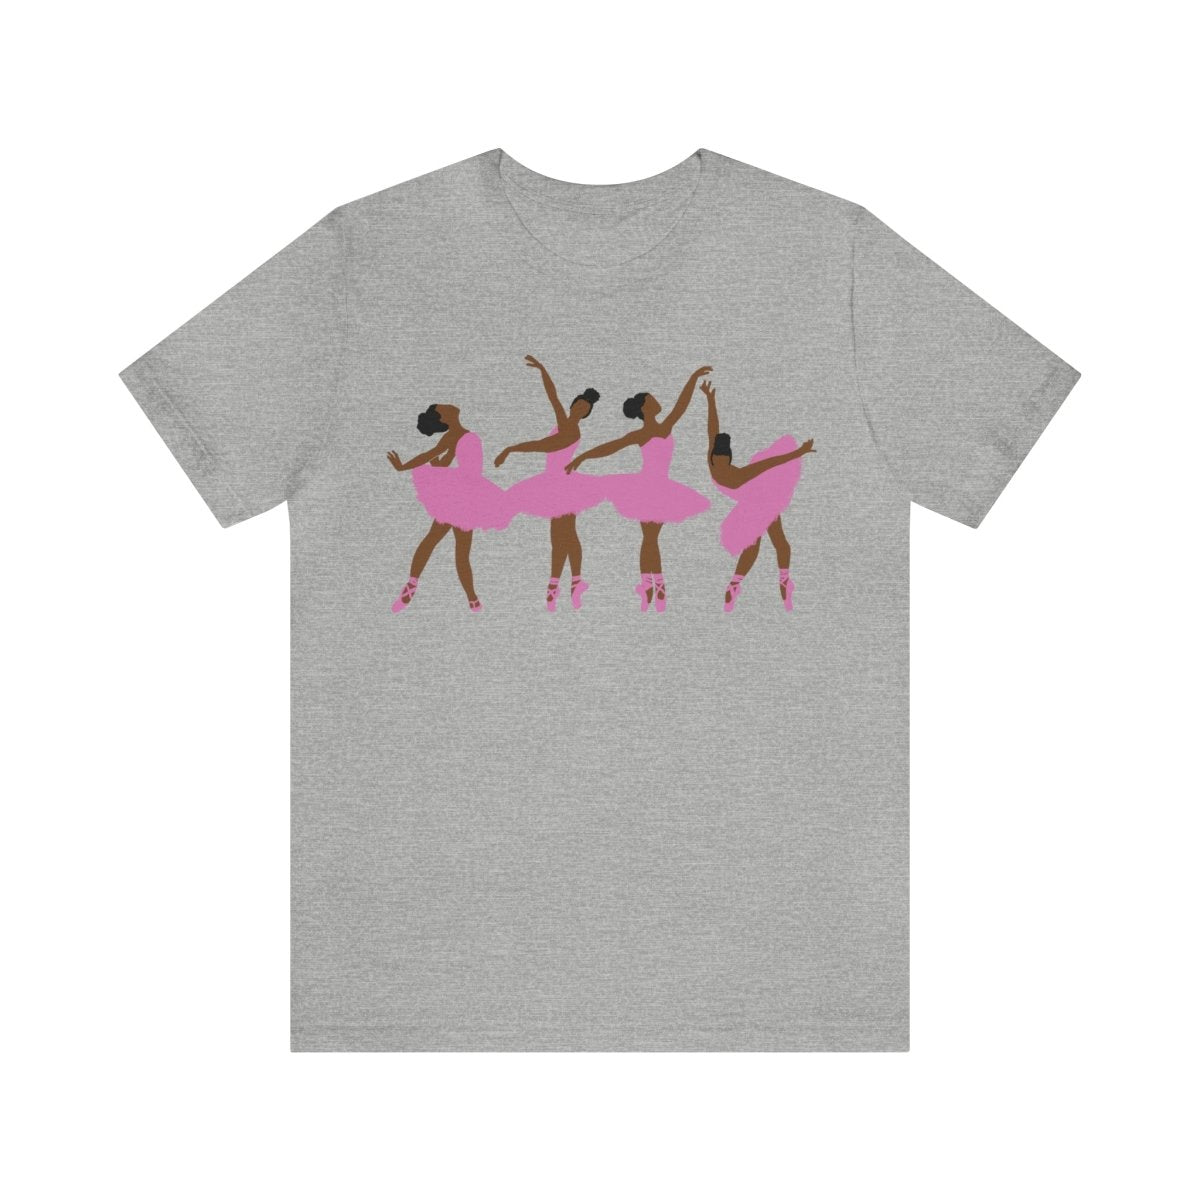 Black Ballerinas Shirt - The Trini Gee